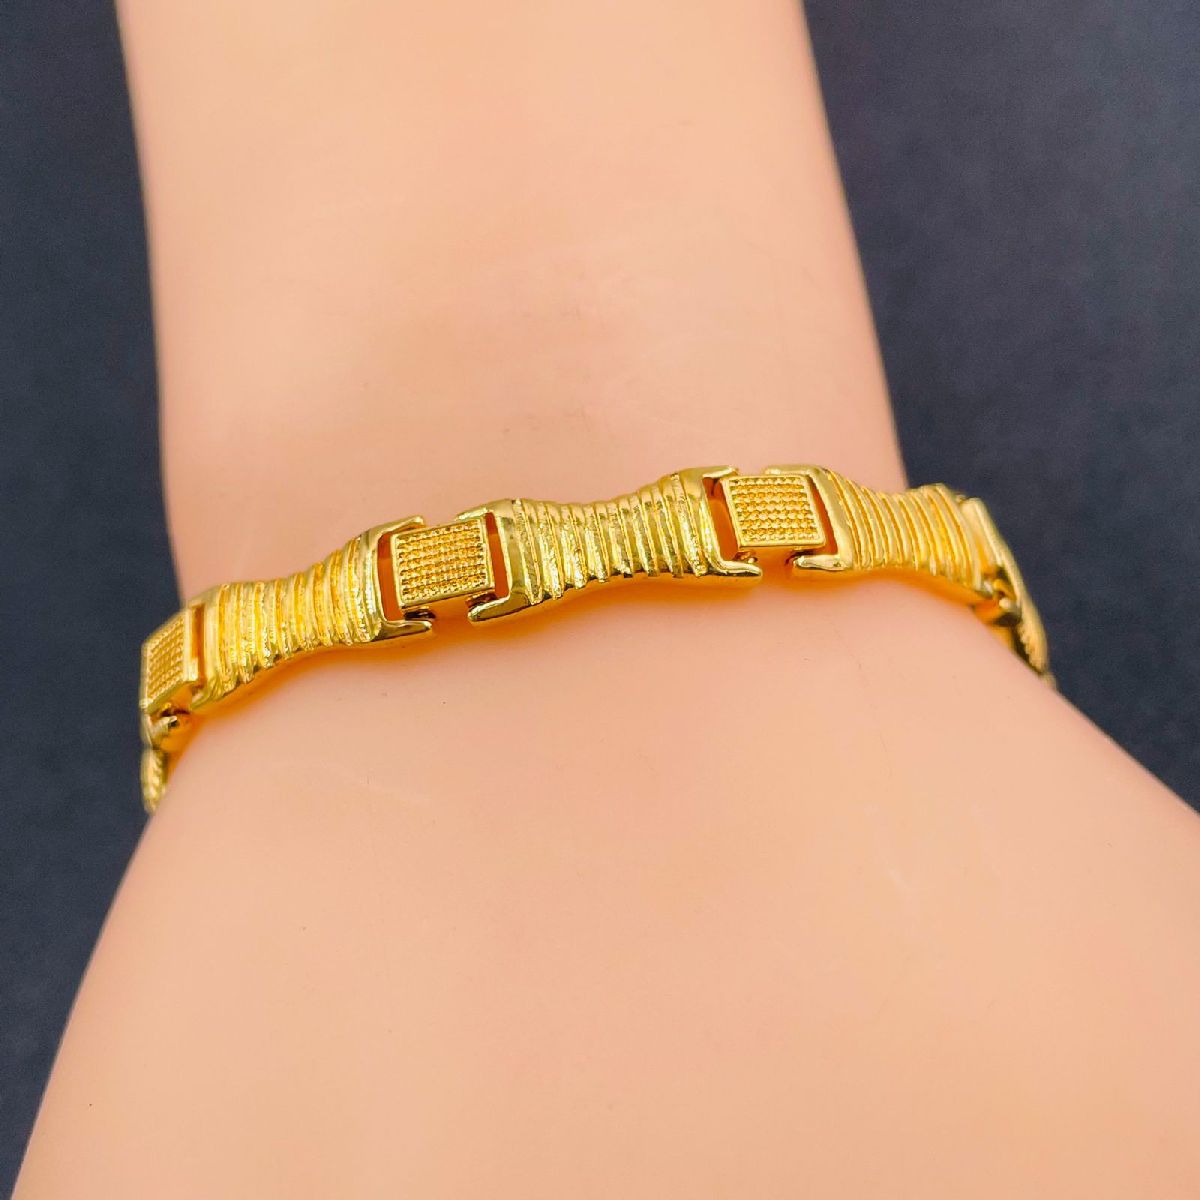 22k Gold Designer Stylish Bracelet Men's exclusive 916% casting CZ bracelets  76 | eBay